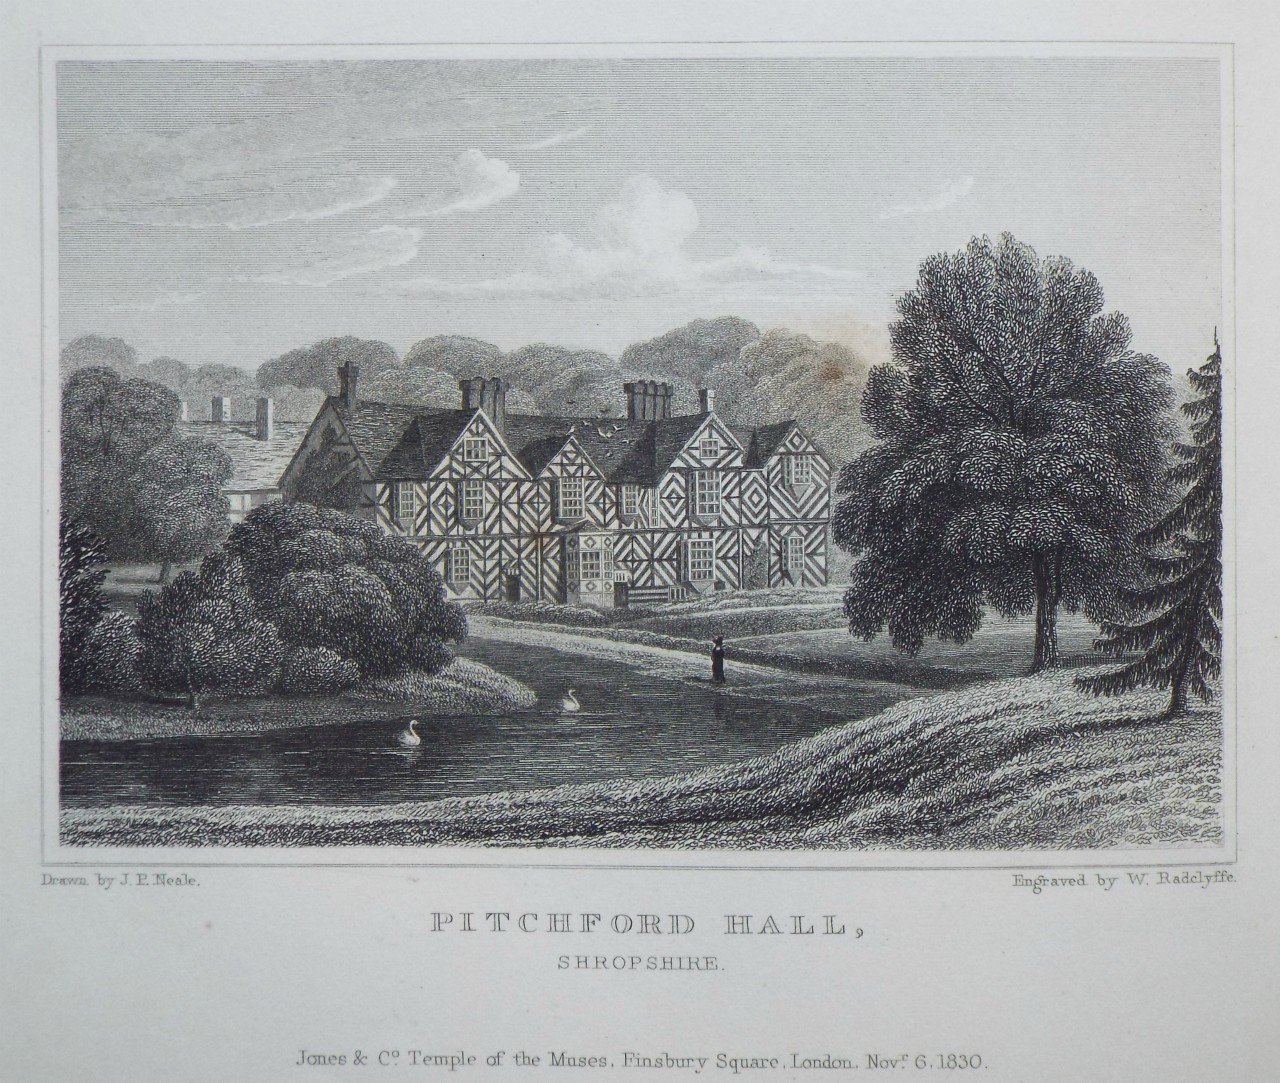 Print - Pitchford Hall, Shropshire. - Radclyffe